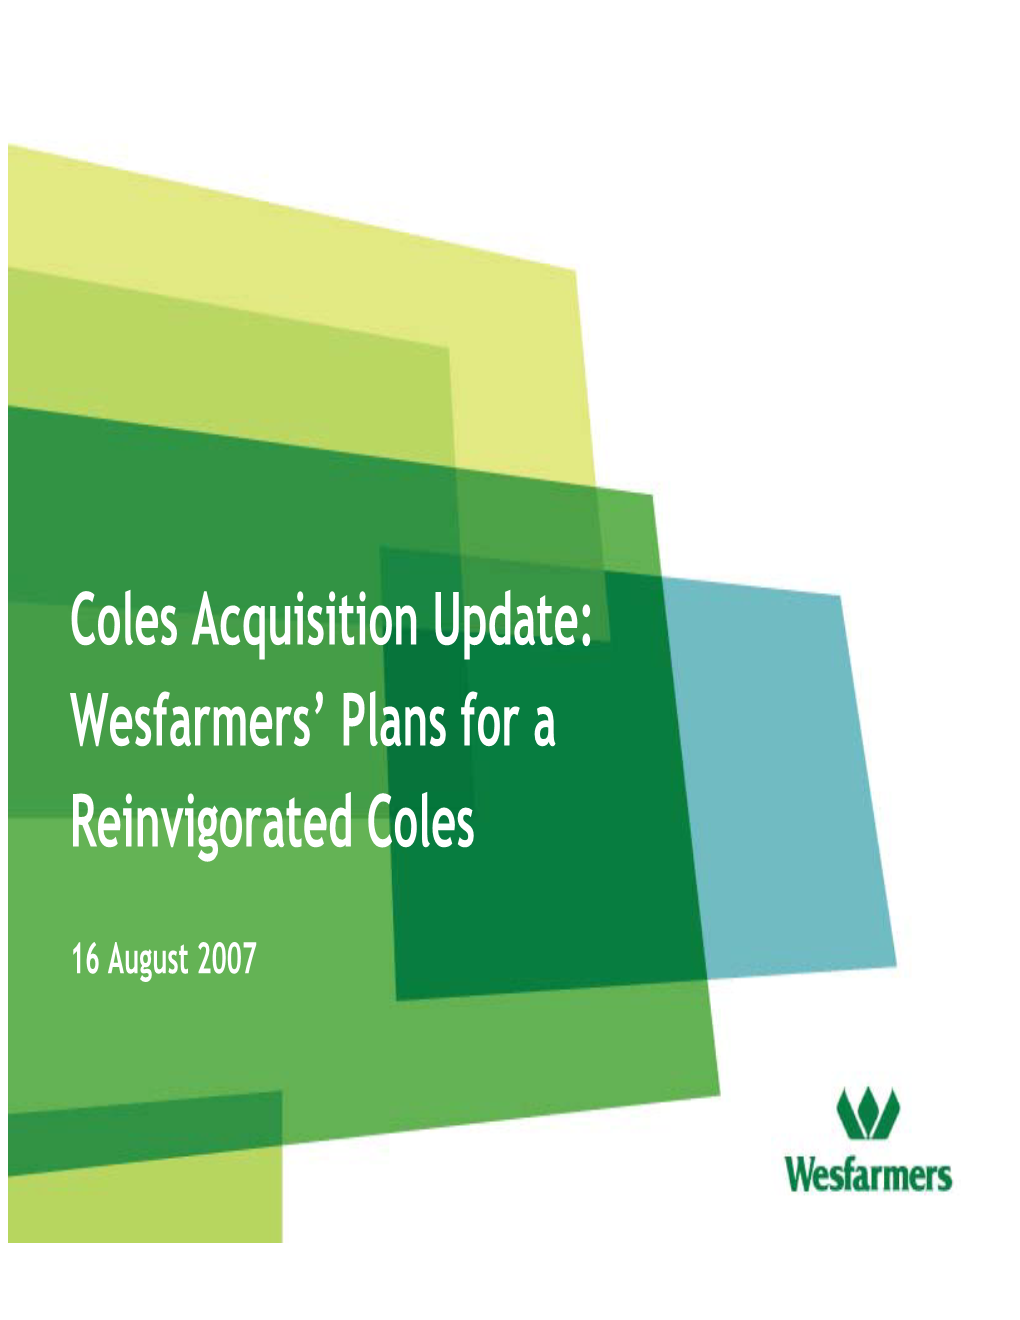 Coles Acquisition Update: Wesfarmers' Plans for a Reinvigorated Coles